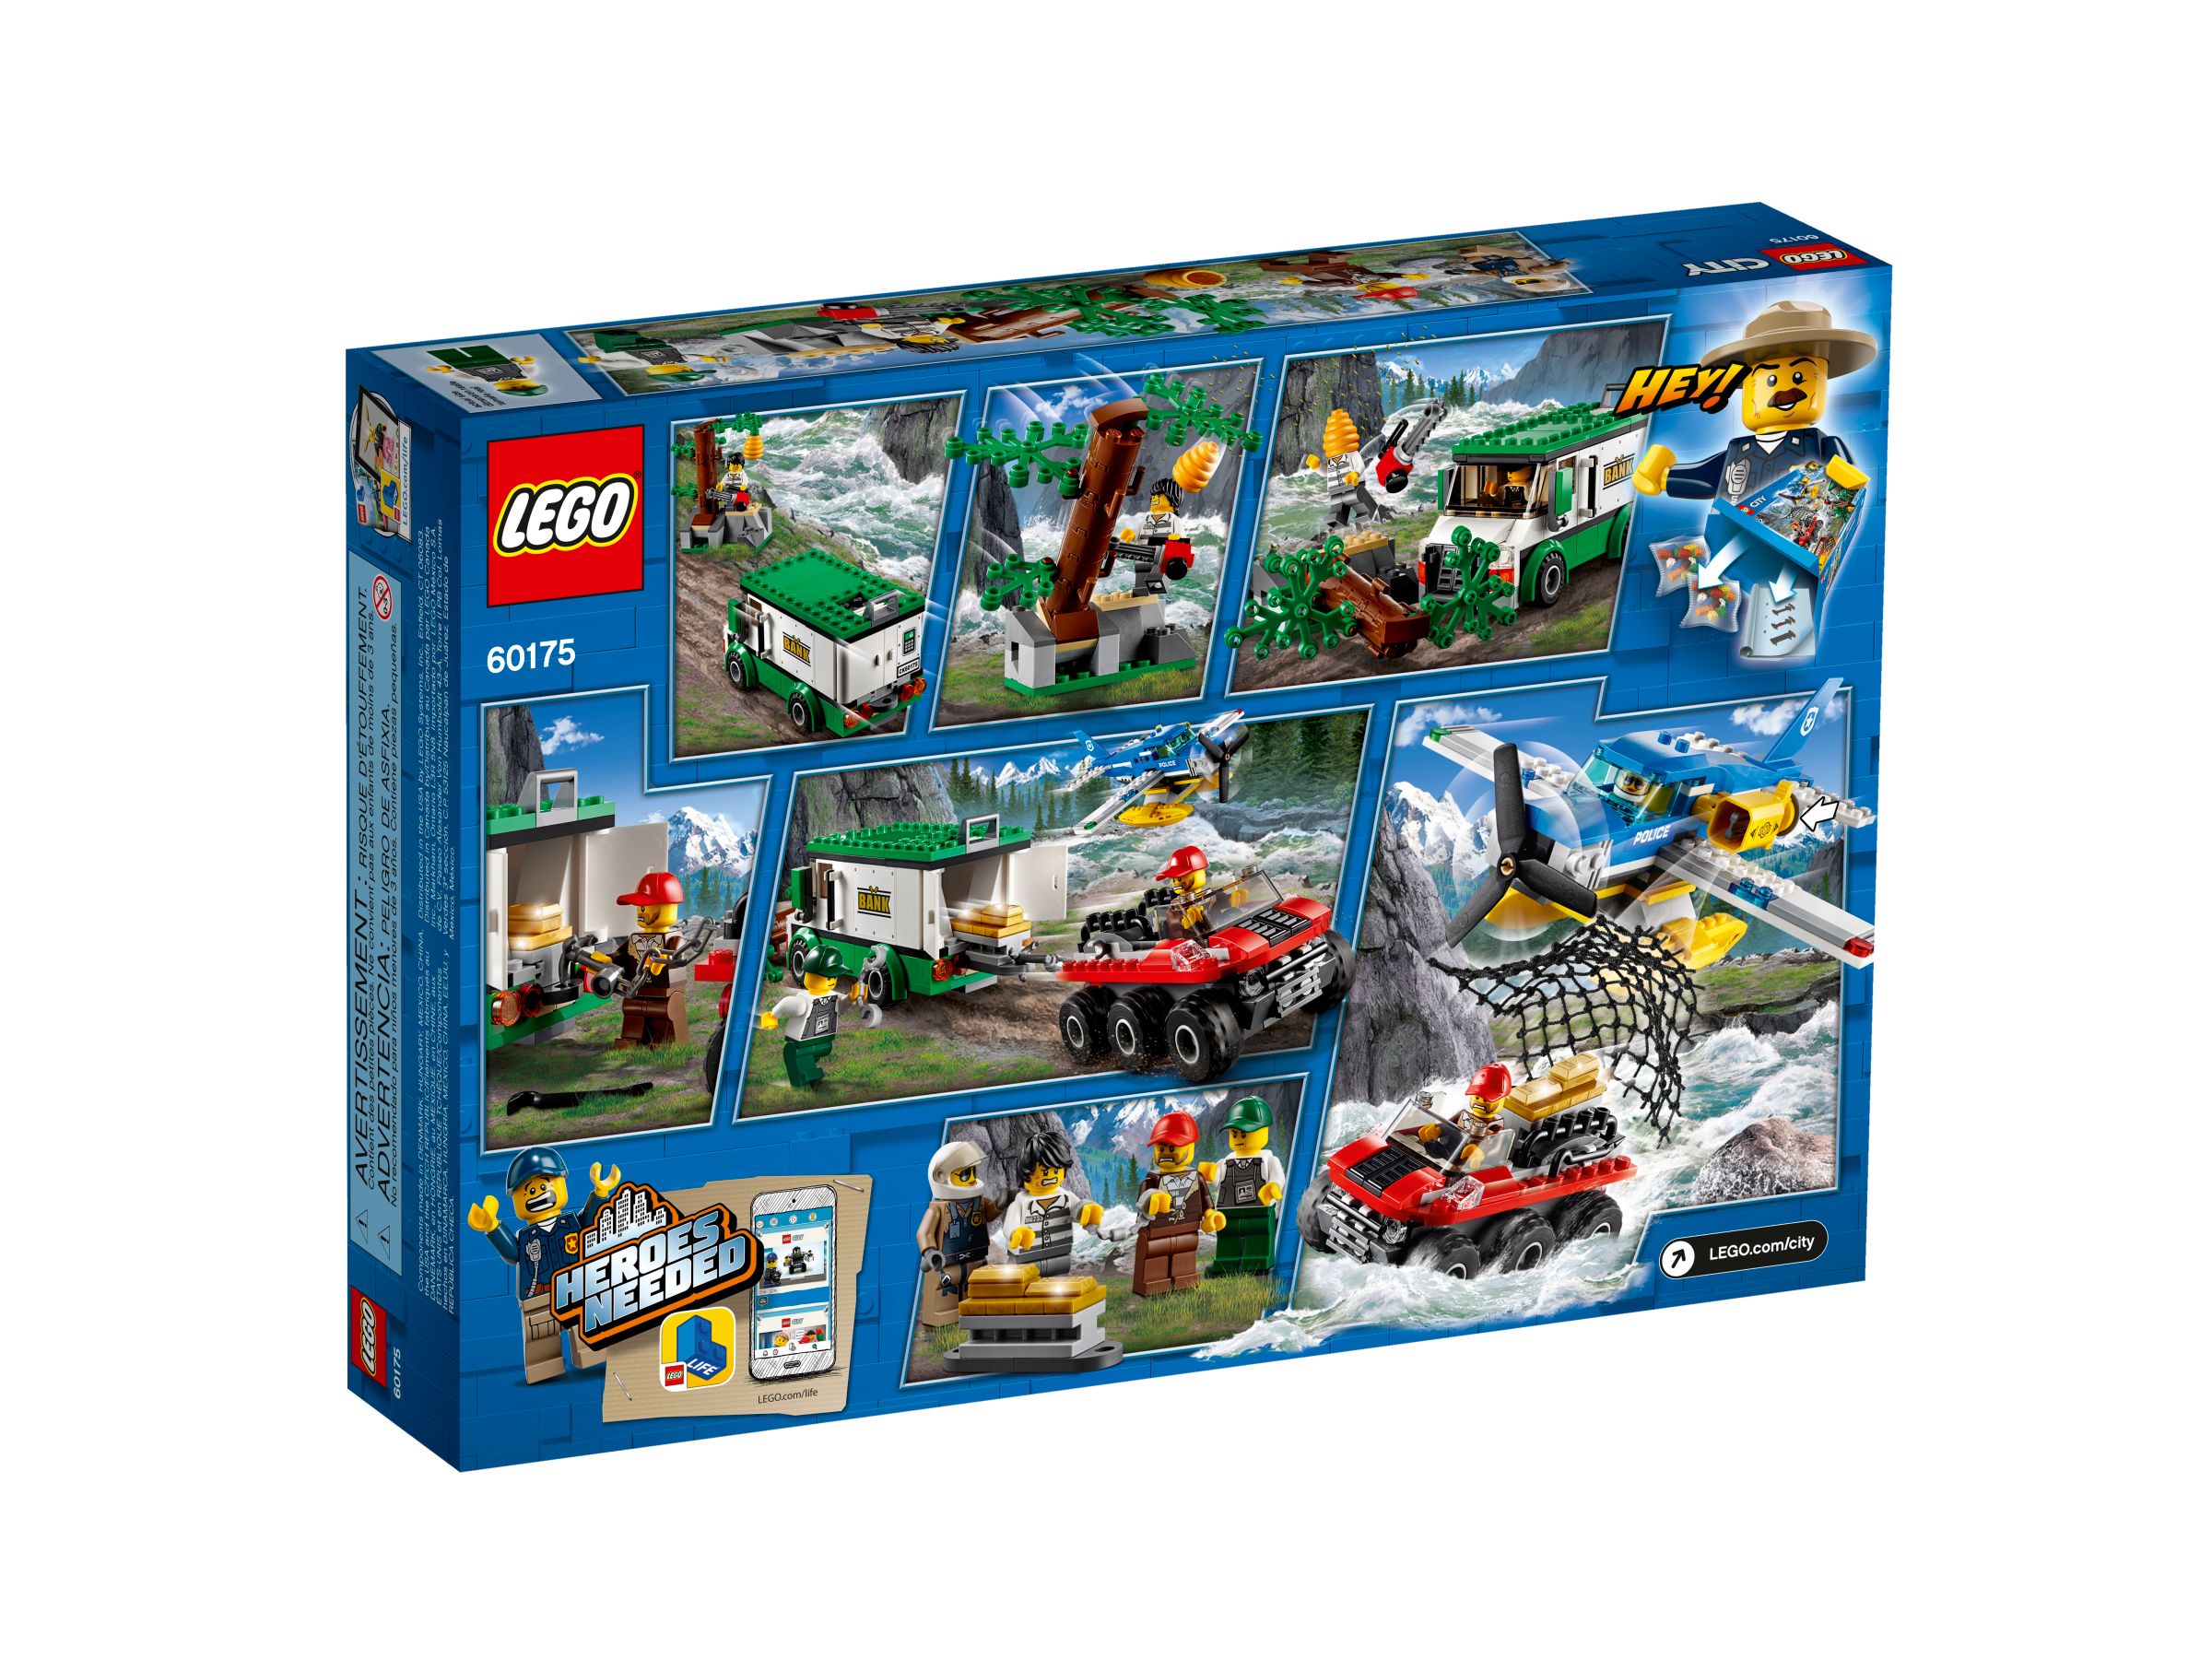 LEGO City 60175 Überfall auf dem Gebirgsfluss LEGO_60175_alt2.jpg